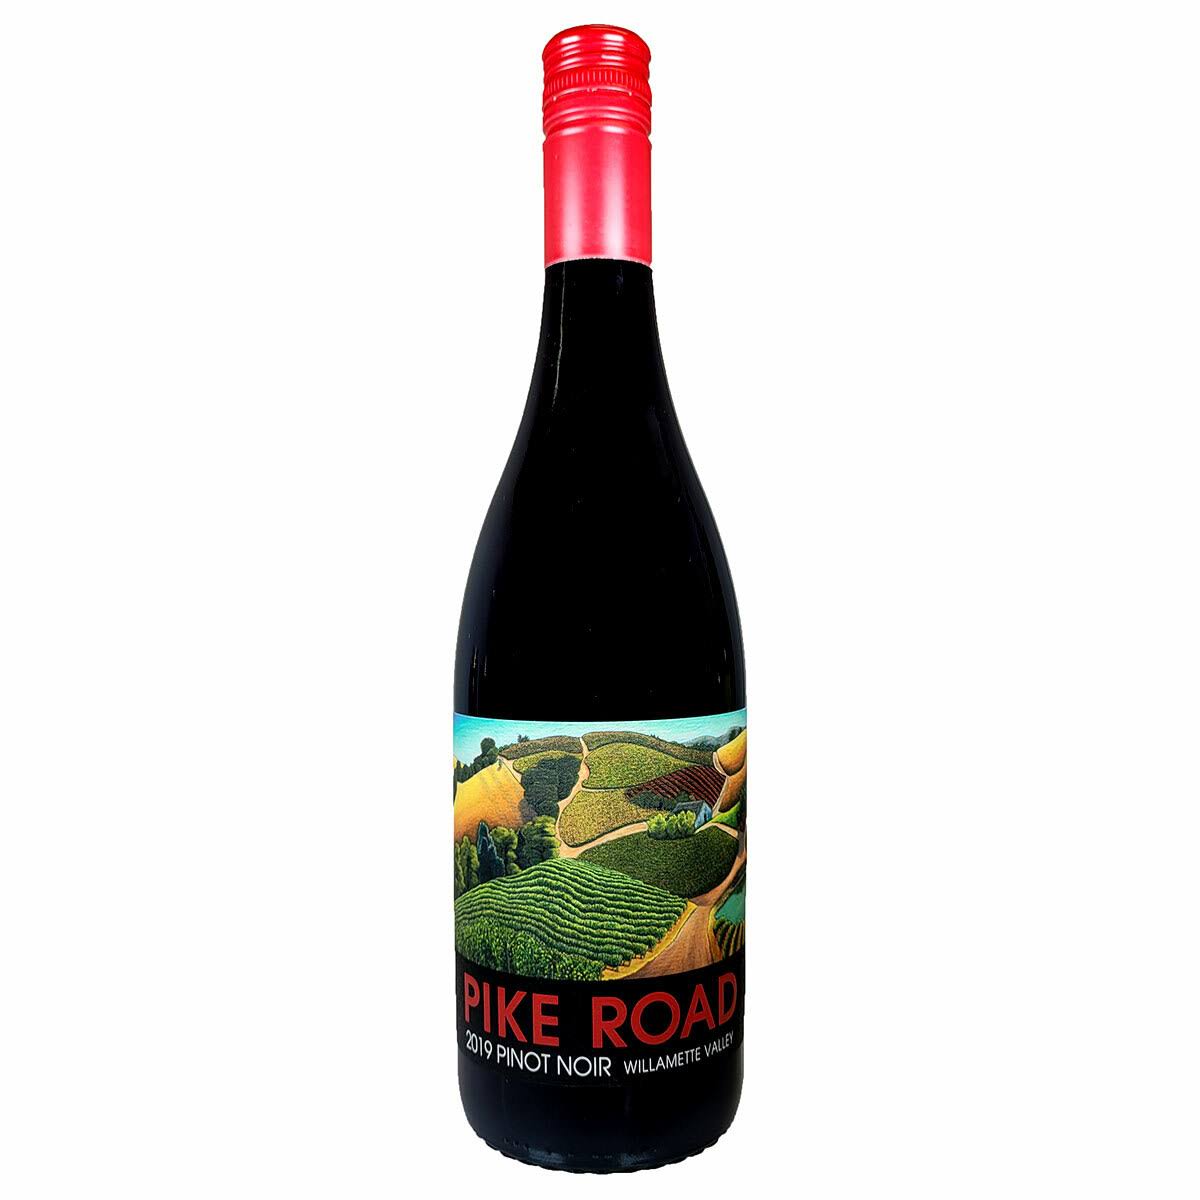 Pike Road Pinot Noir, Willamette Valley, 2015 - 750 ml